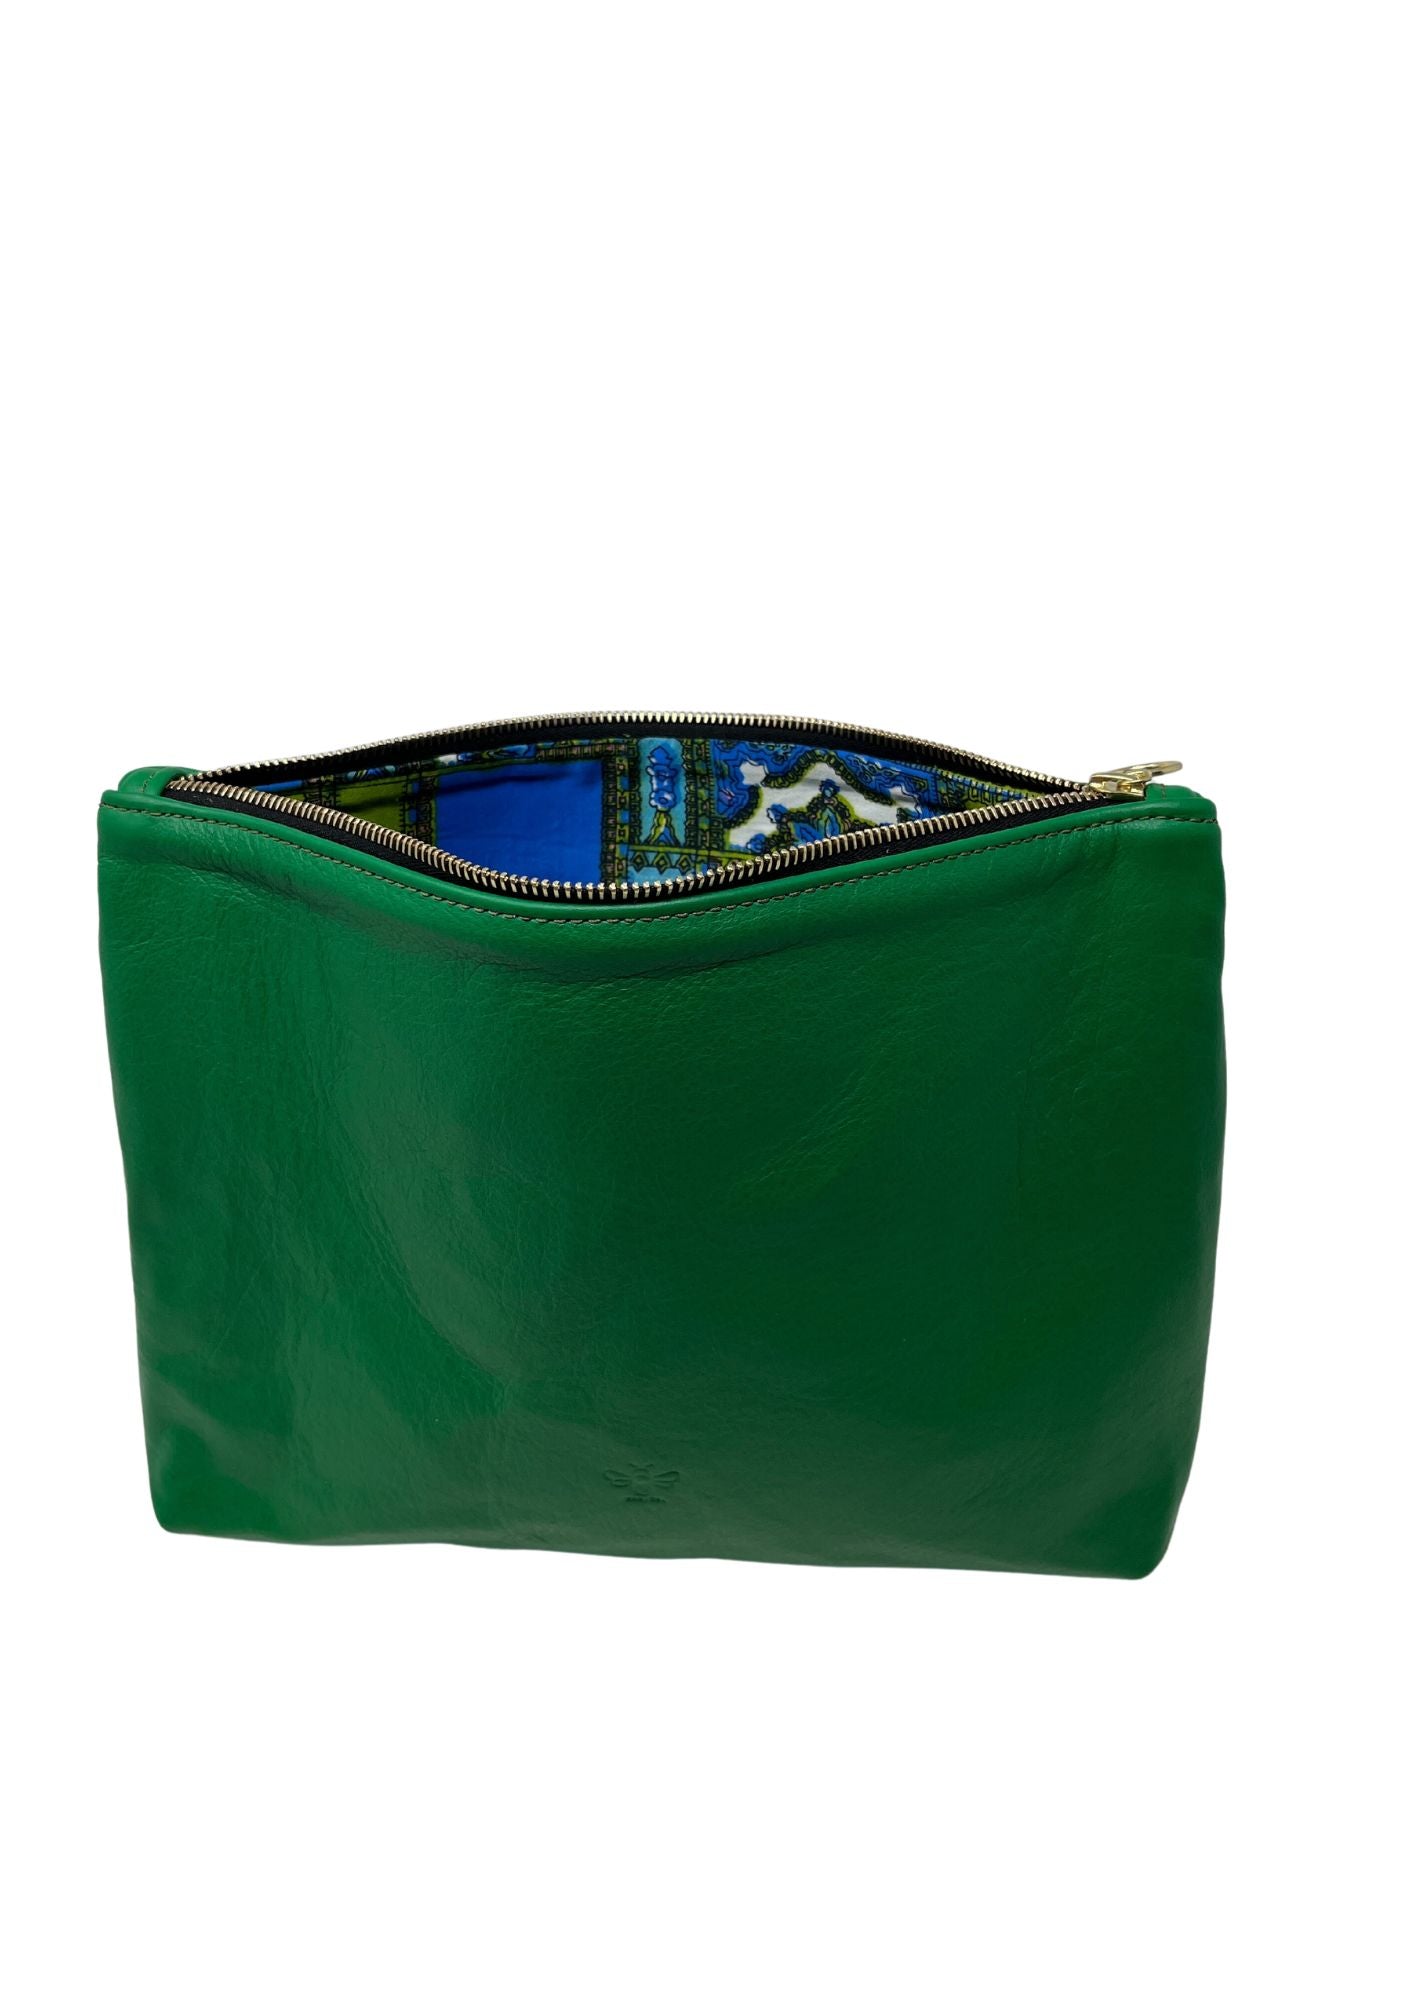 Frances Bag in Italian Green leather